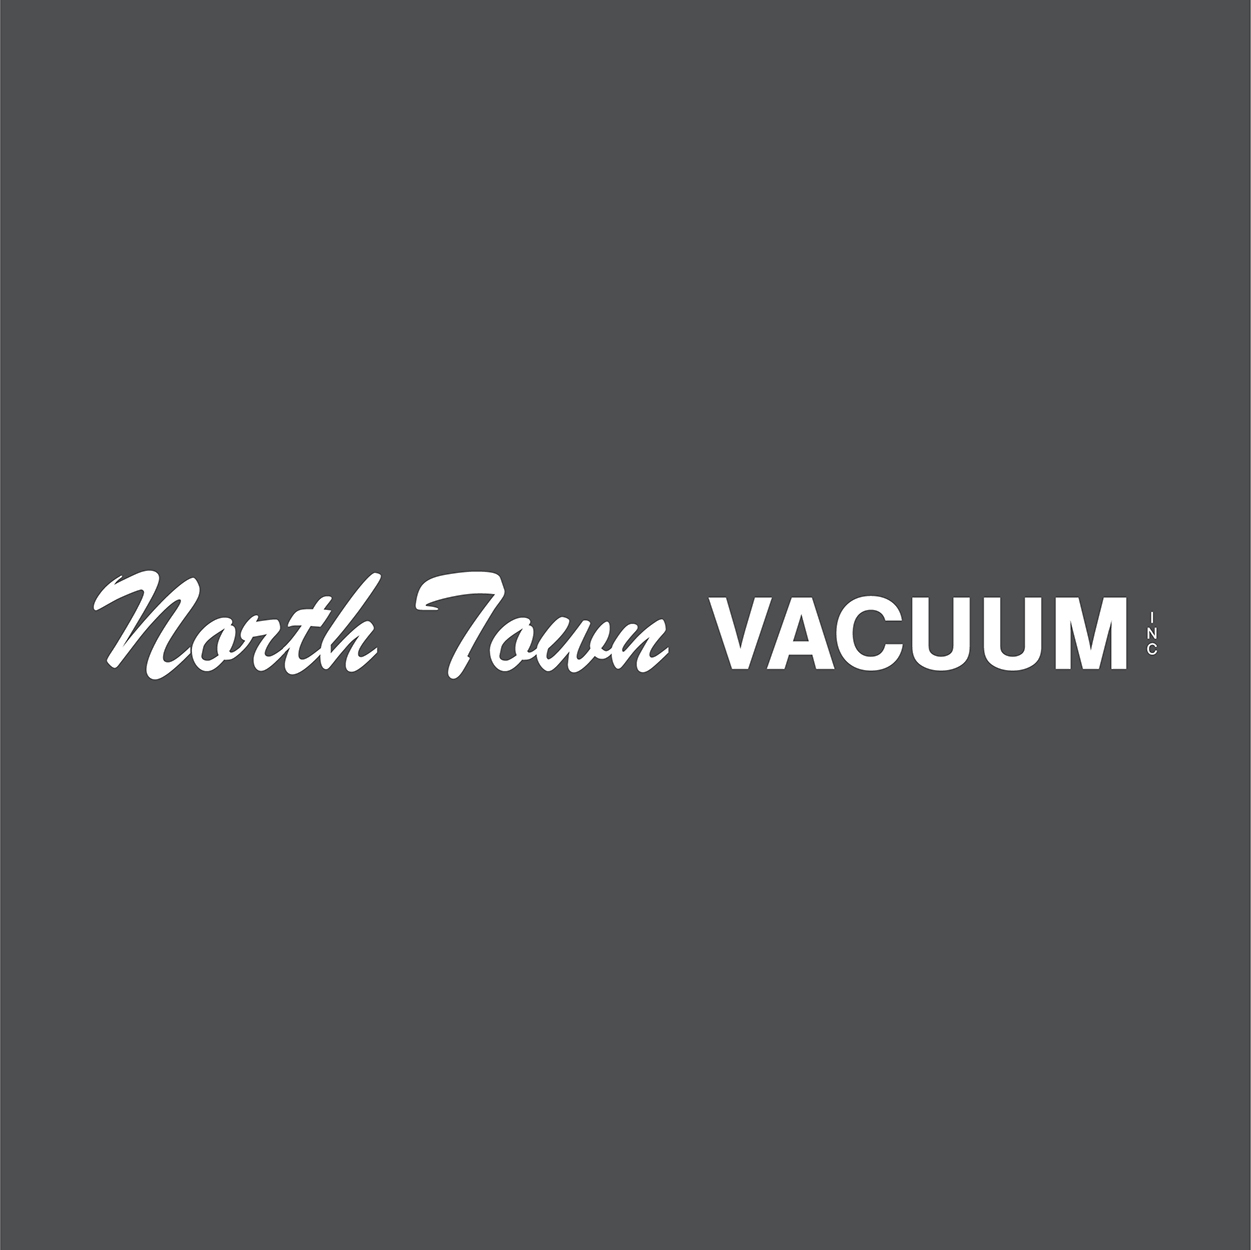 Northtown Vacuum